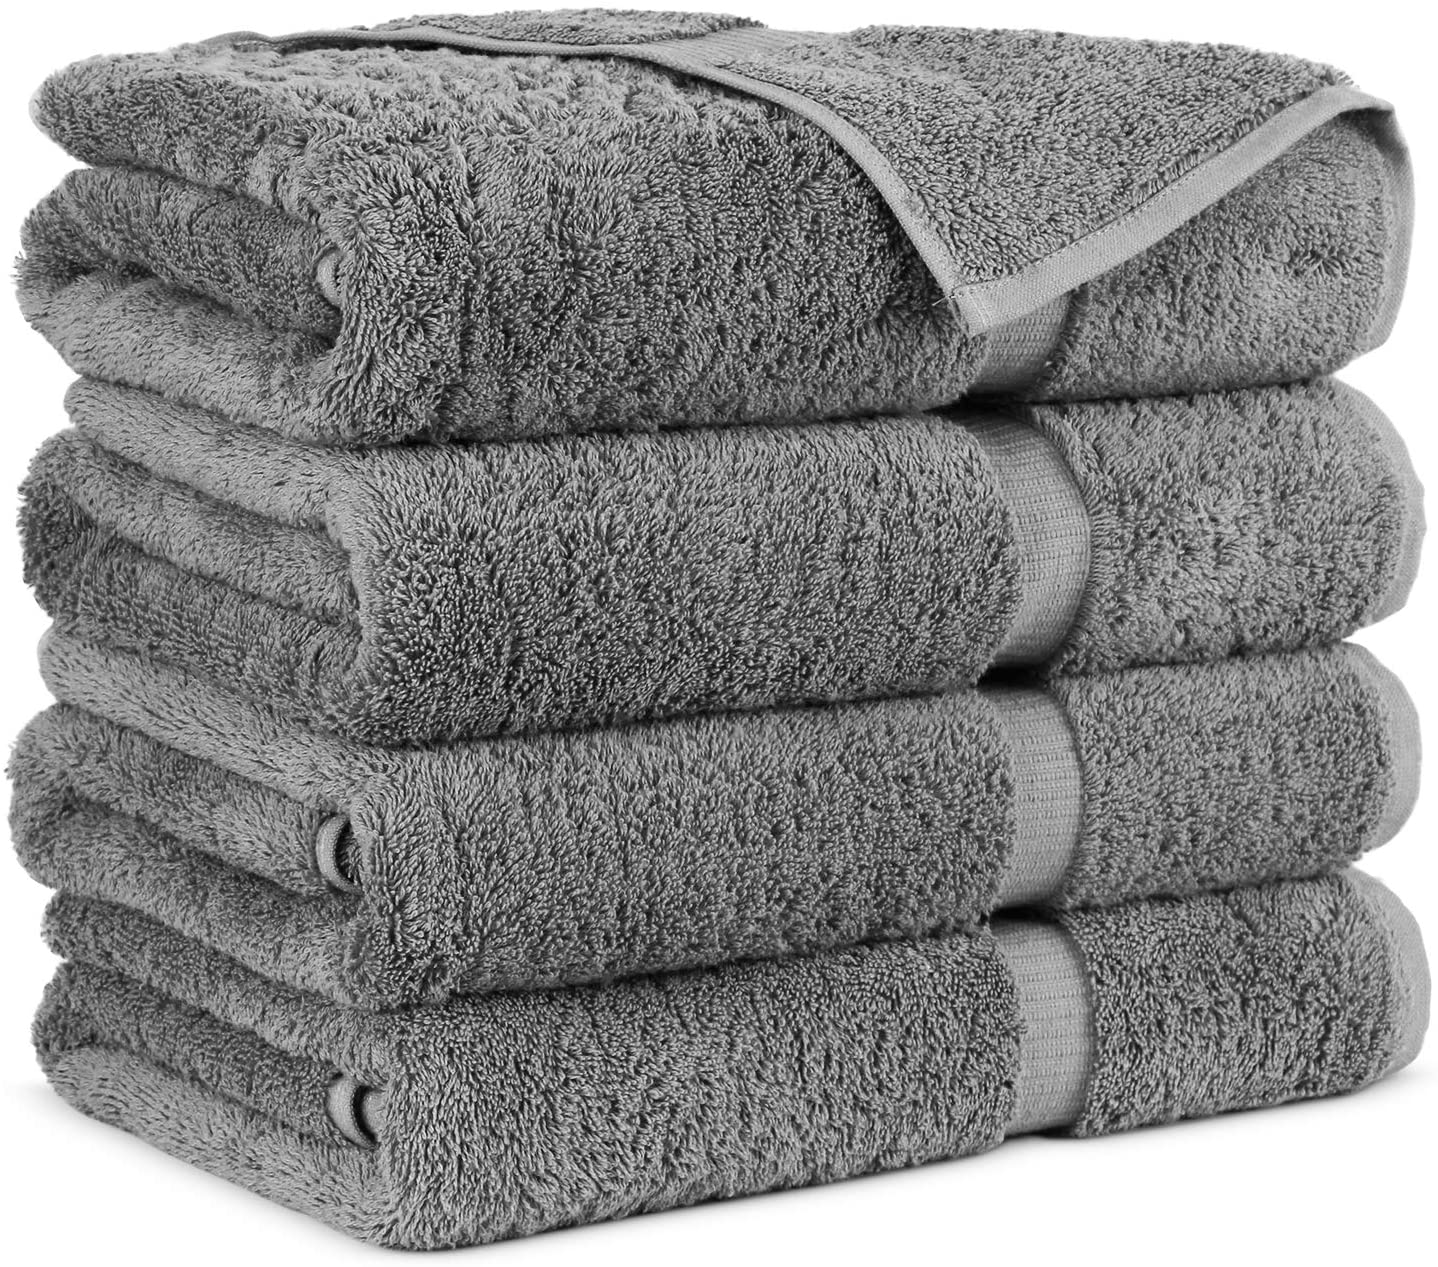 Towel Bazaar Premium Turkish Cotton Super Soft and Absorbent Towels 8-Piece Towel Set, Coral 